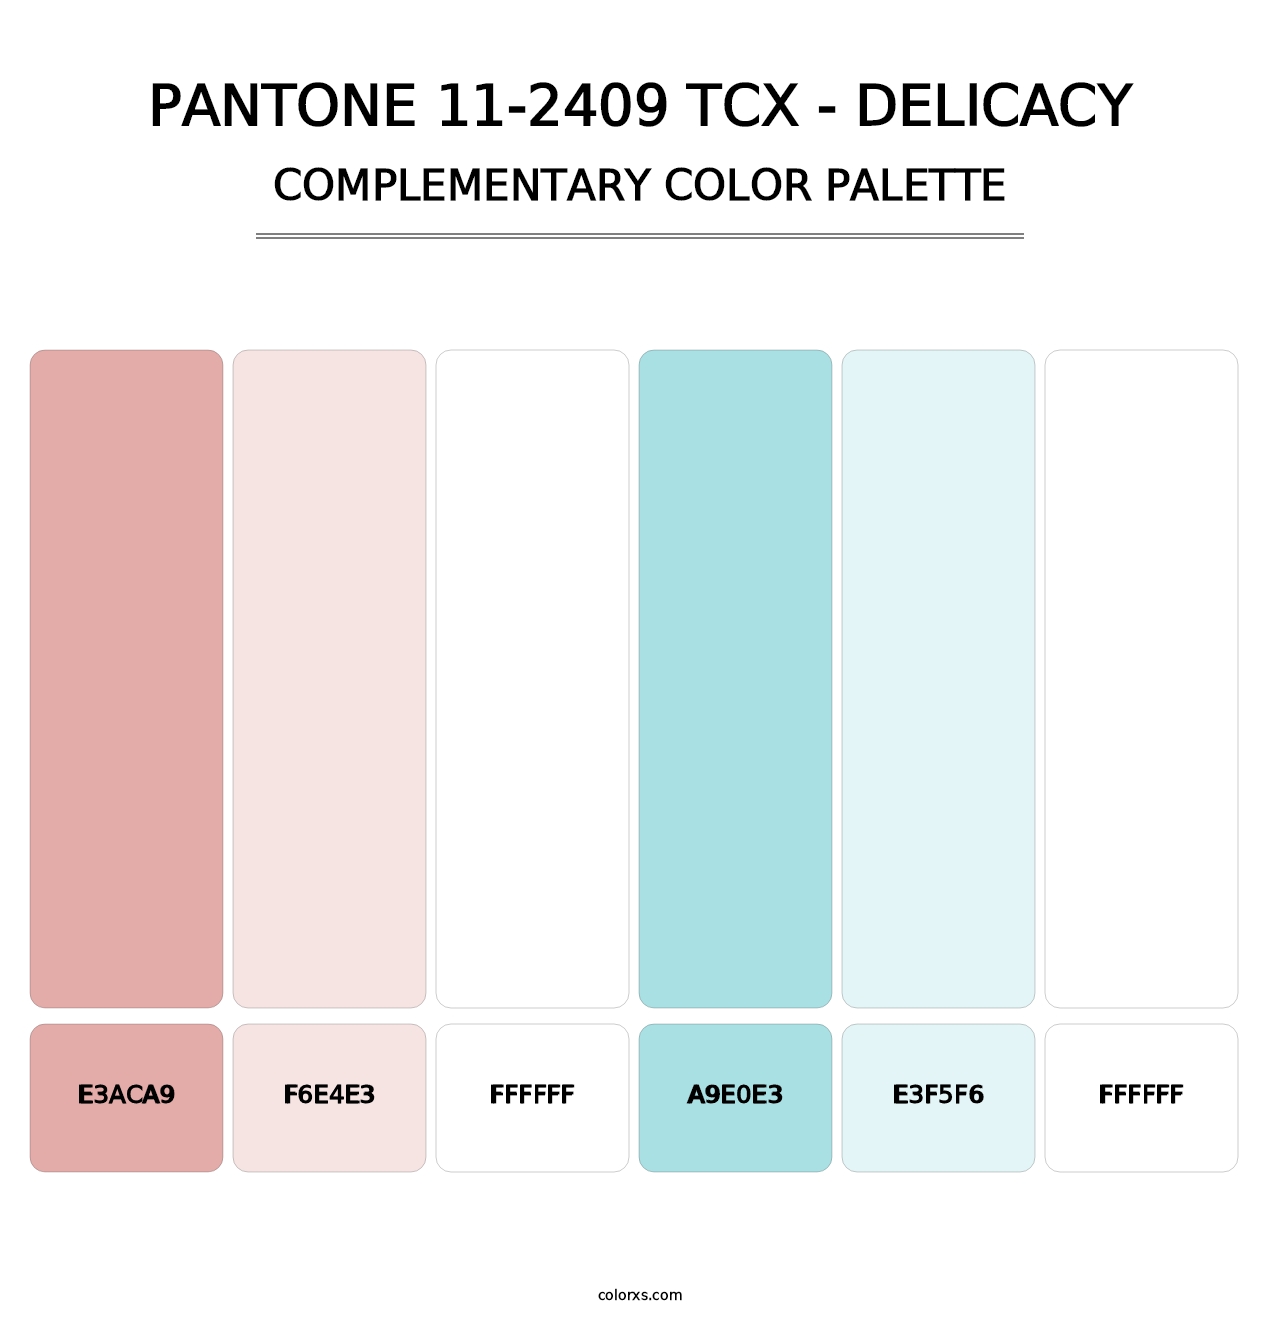 PANTONE 11-2409 TCX - Delicacy - Complementary Color Palette